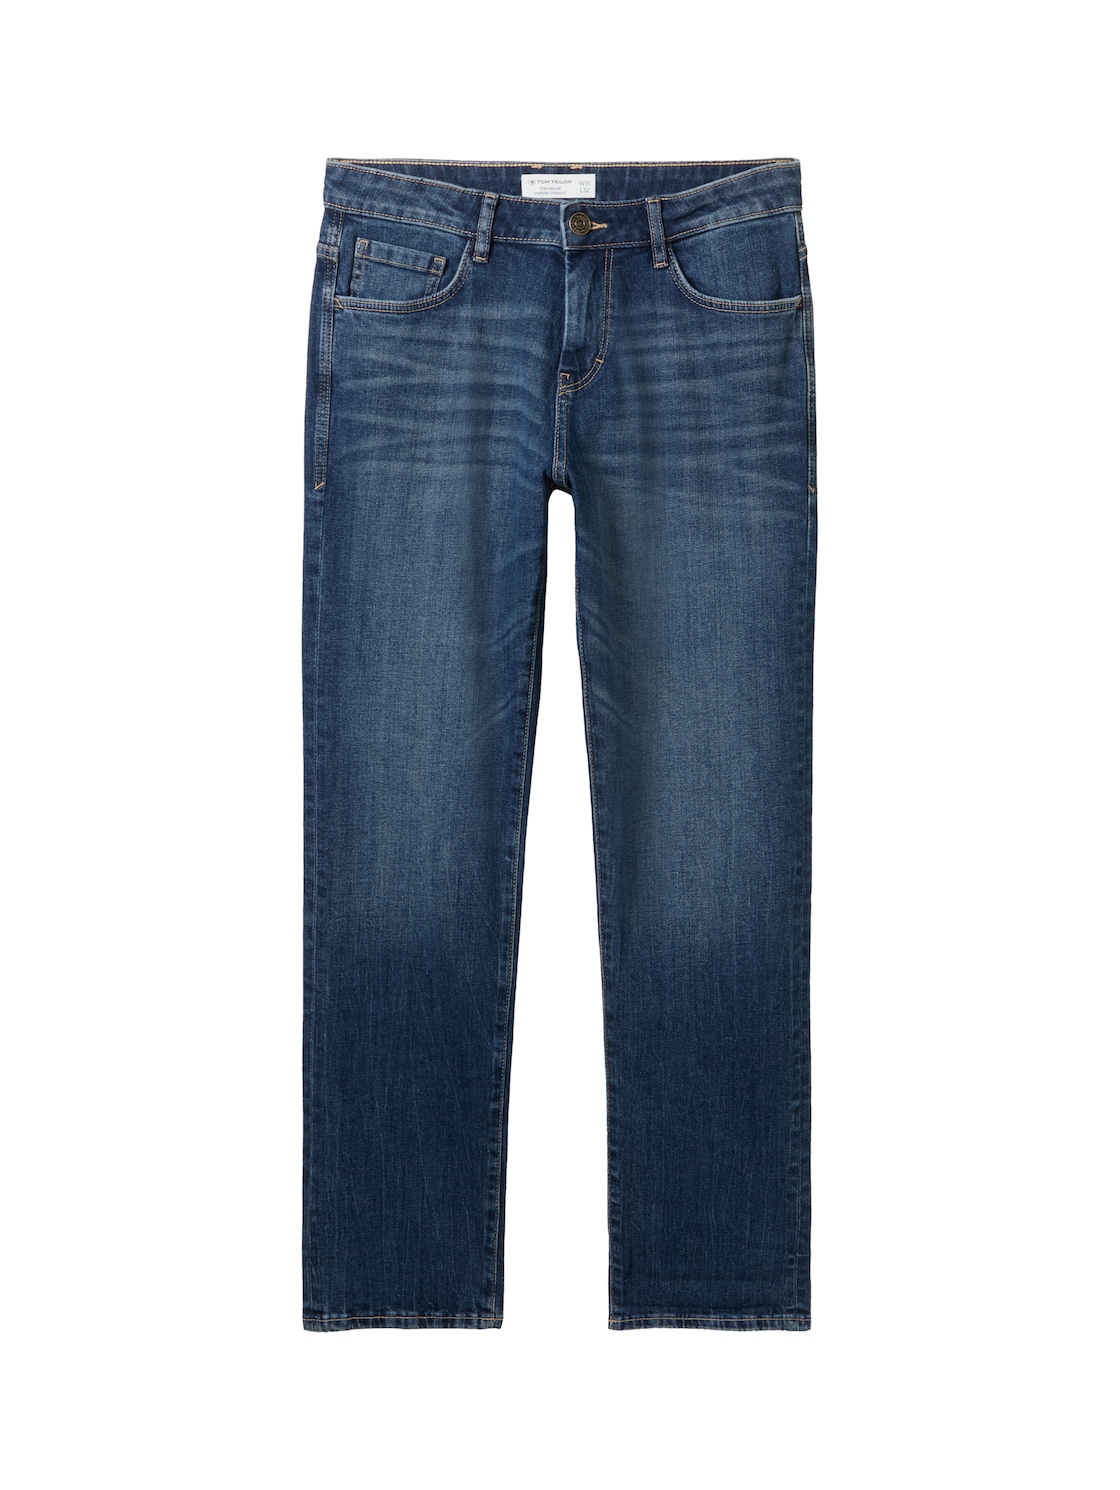 TOM TAILOR Herren Marvin Straight Jeans, blau, Uni, Gr. 36/36 von Tom Tailor